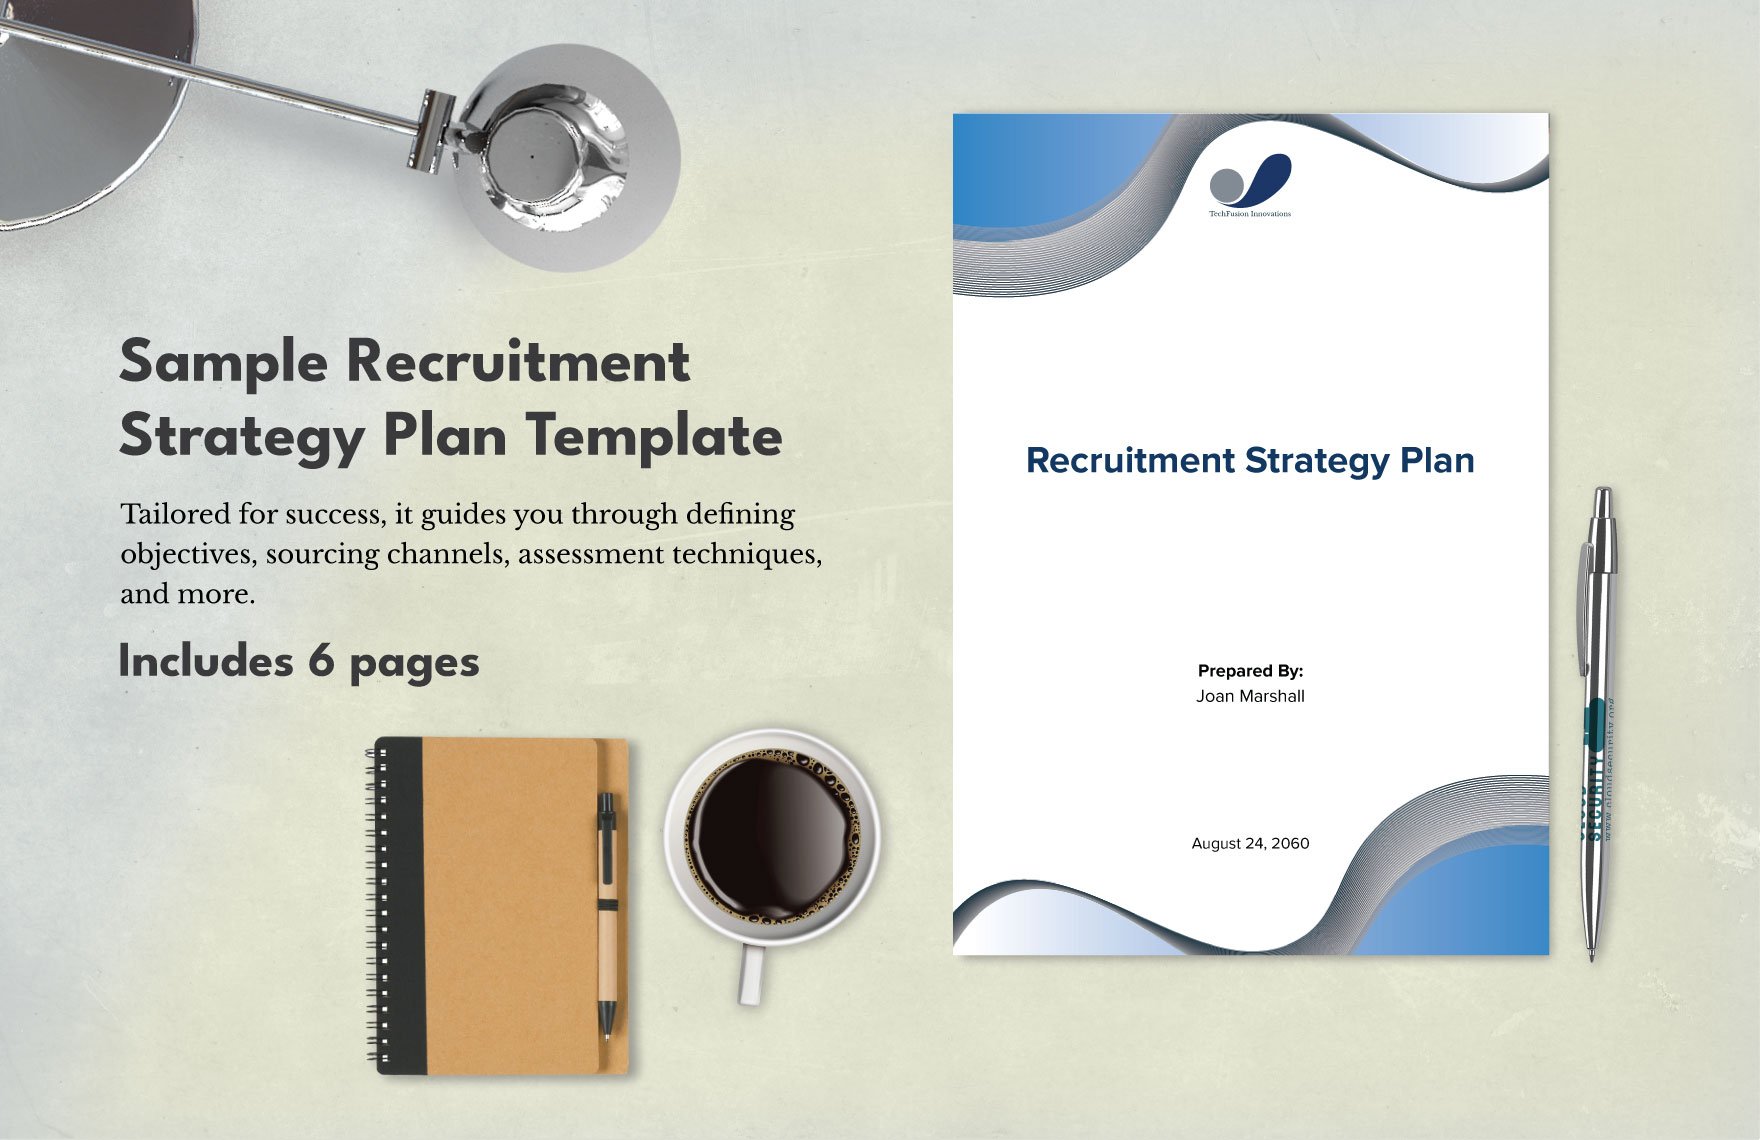 Sample Recruitment Strategy Plan Template